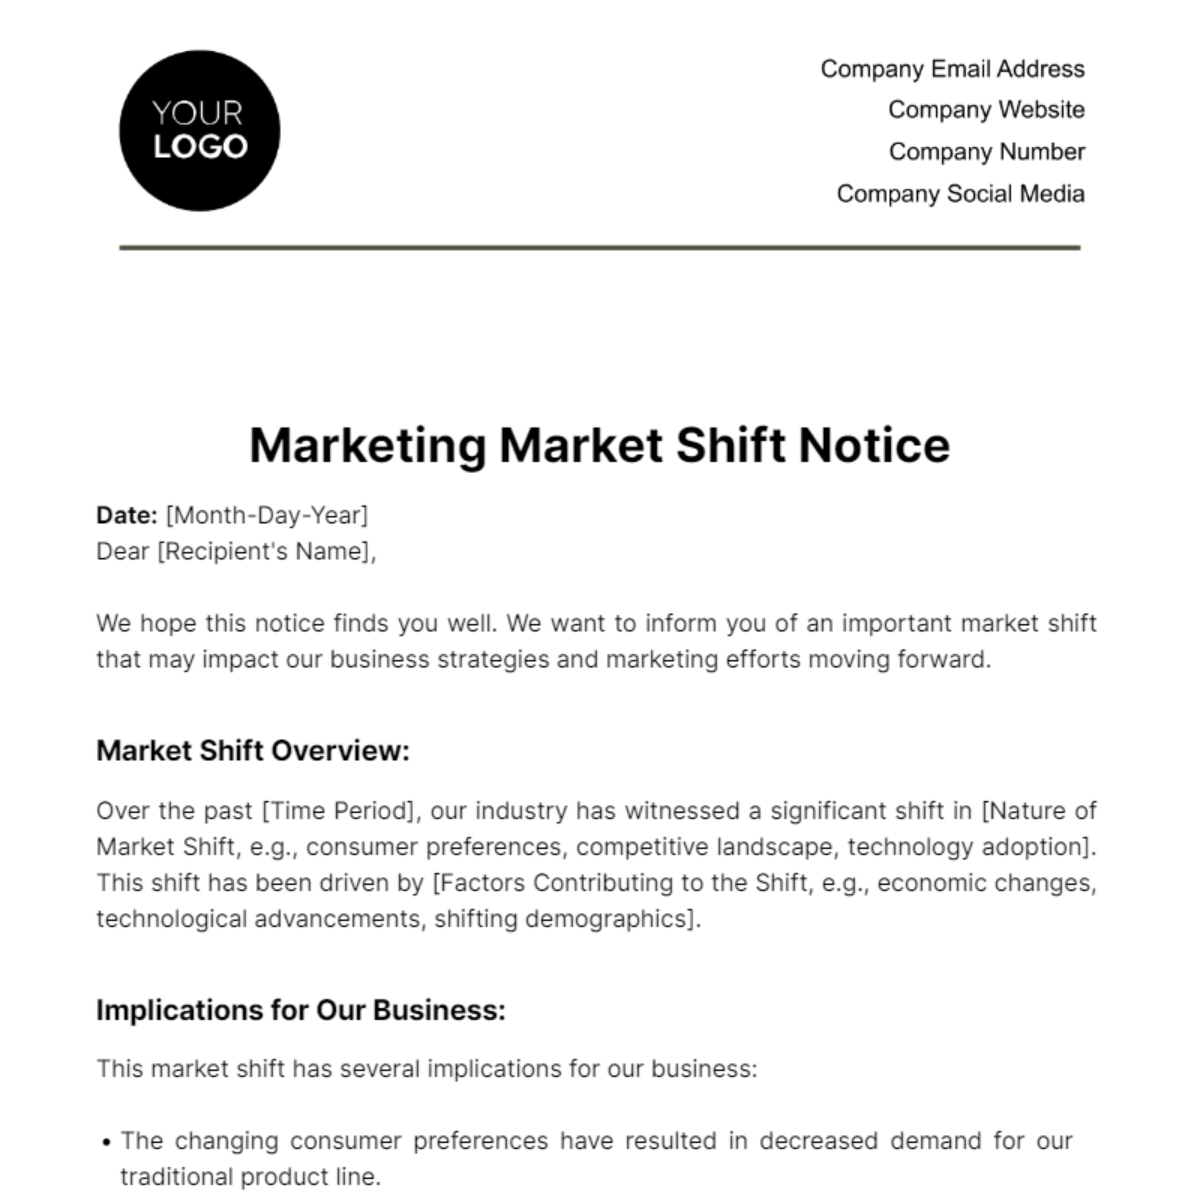 Marketing Market Shift Notice Template